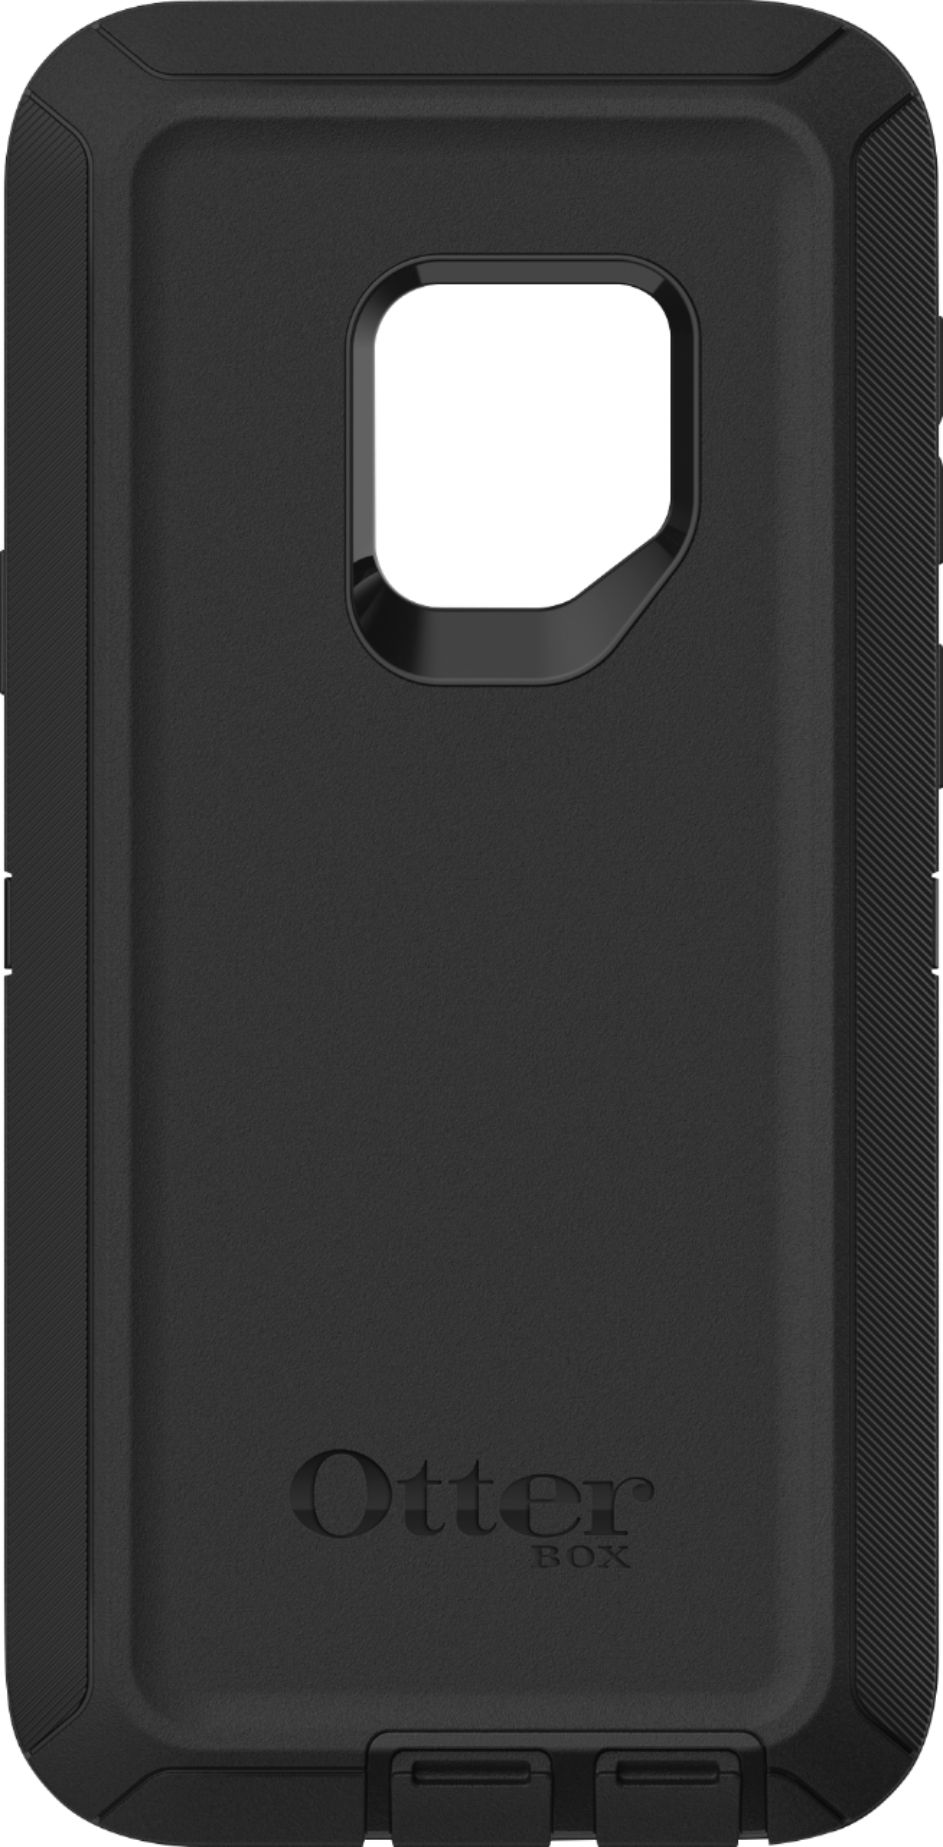 meel vertel het me Pelgrim Best Buy: OtterBox Defender Series Case for Samsung Galaxy S9 Black 50495BBR